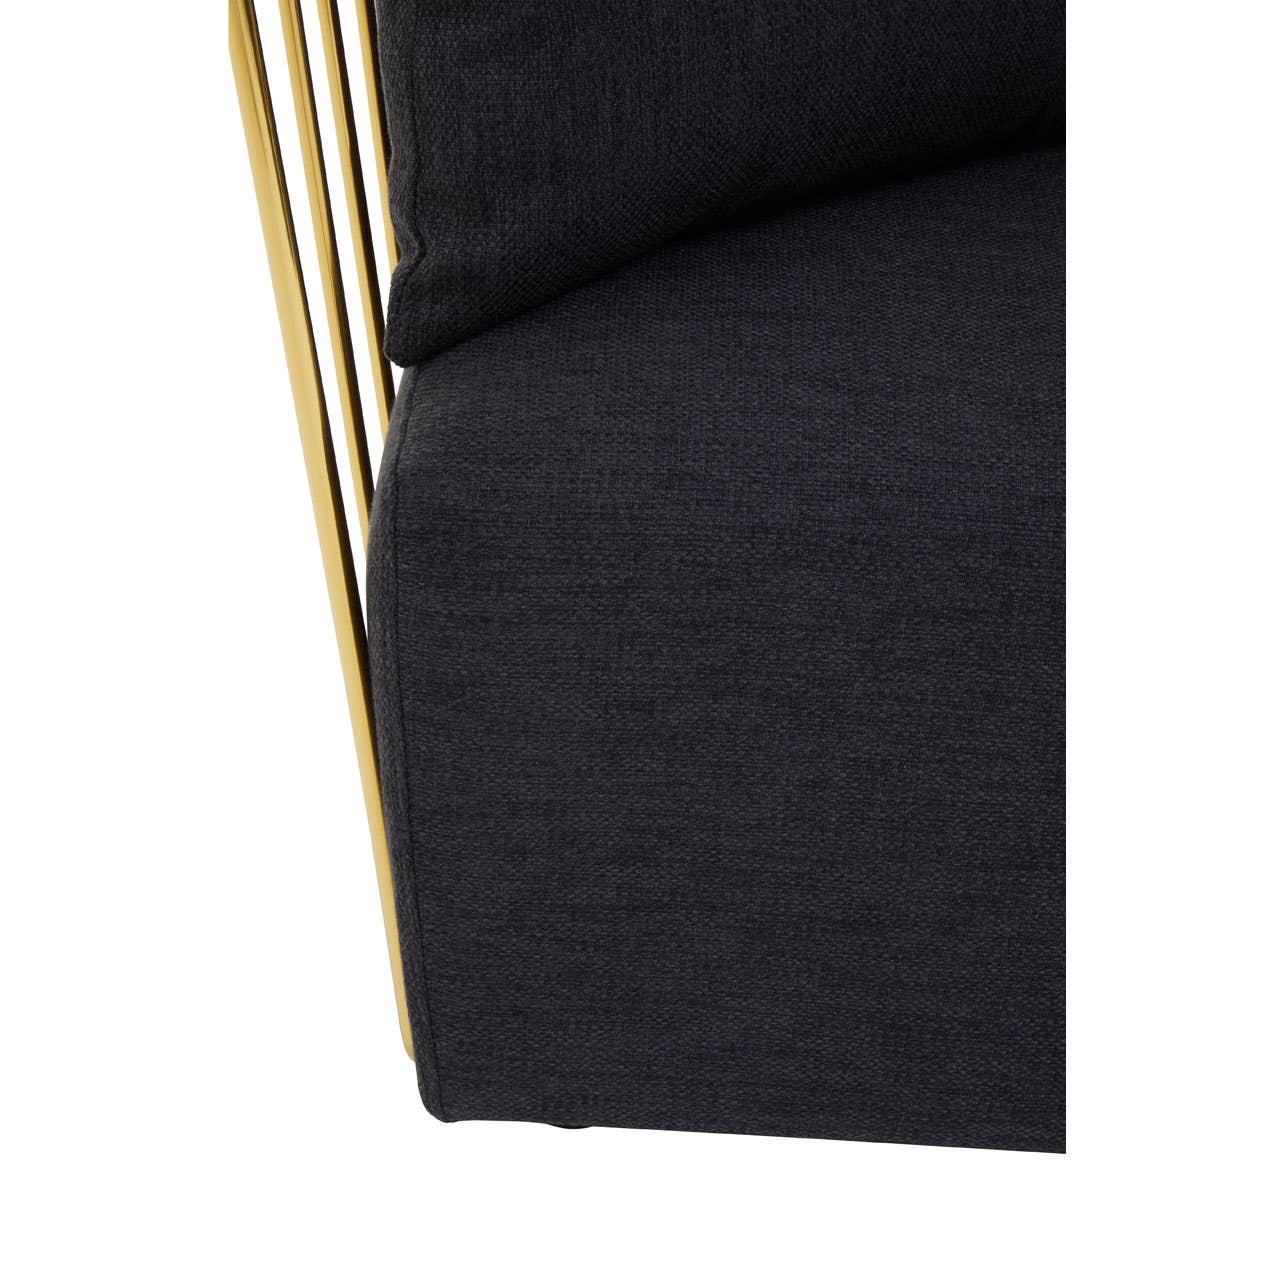 Noosa & Co. Living Azalea Black Fabric Chair House of Isabella UK